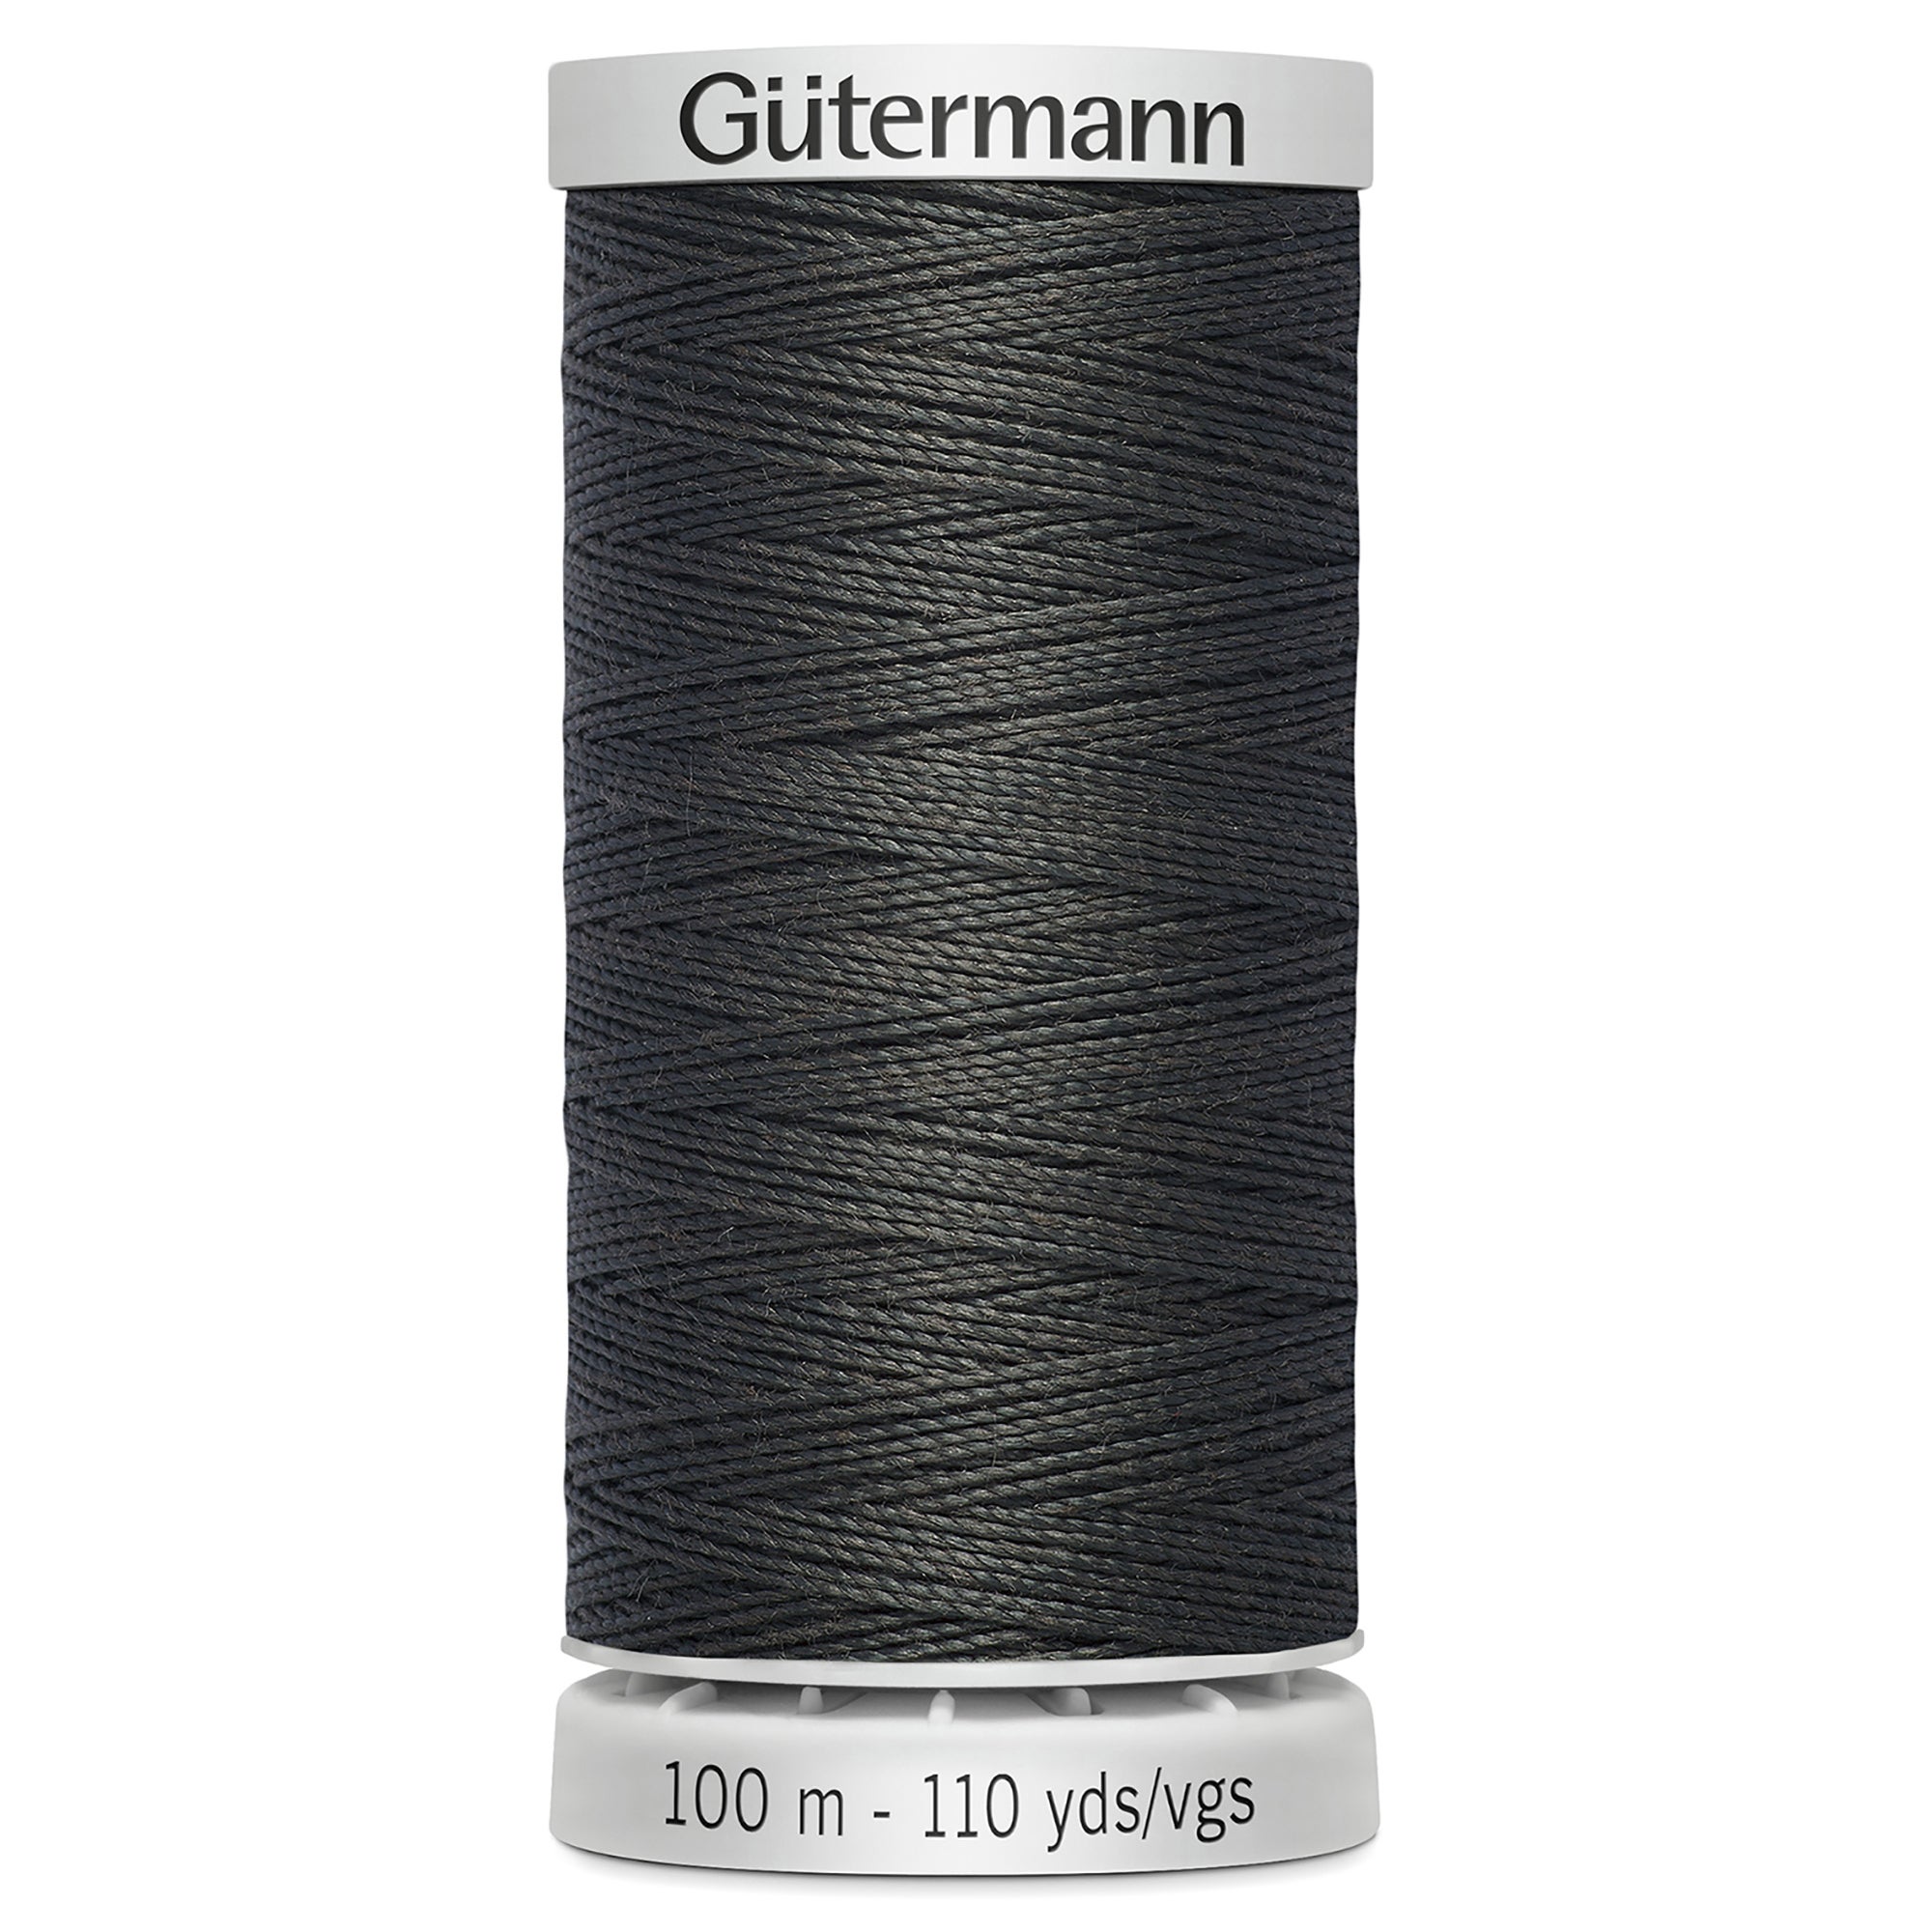 Gutermann Extra Thread 100m Charcoal (036)